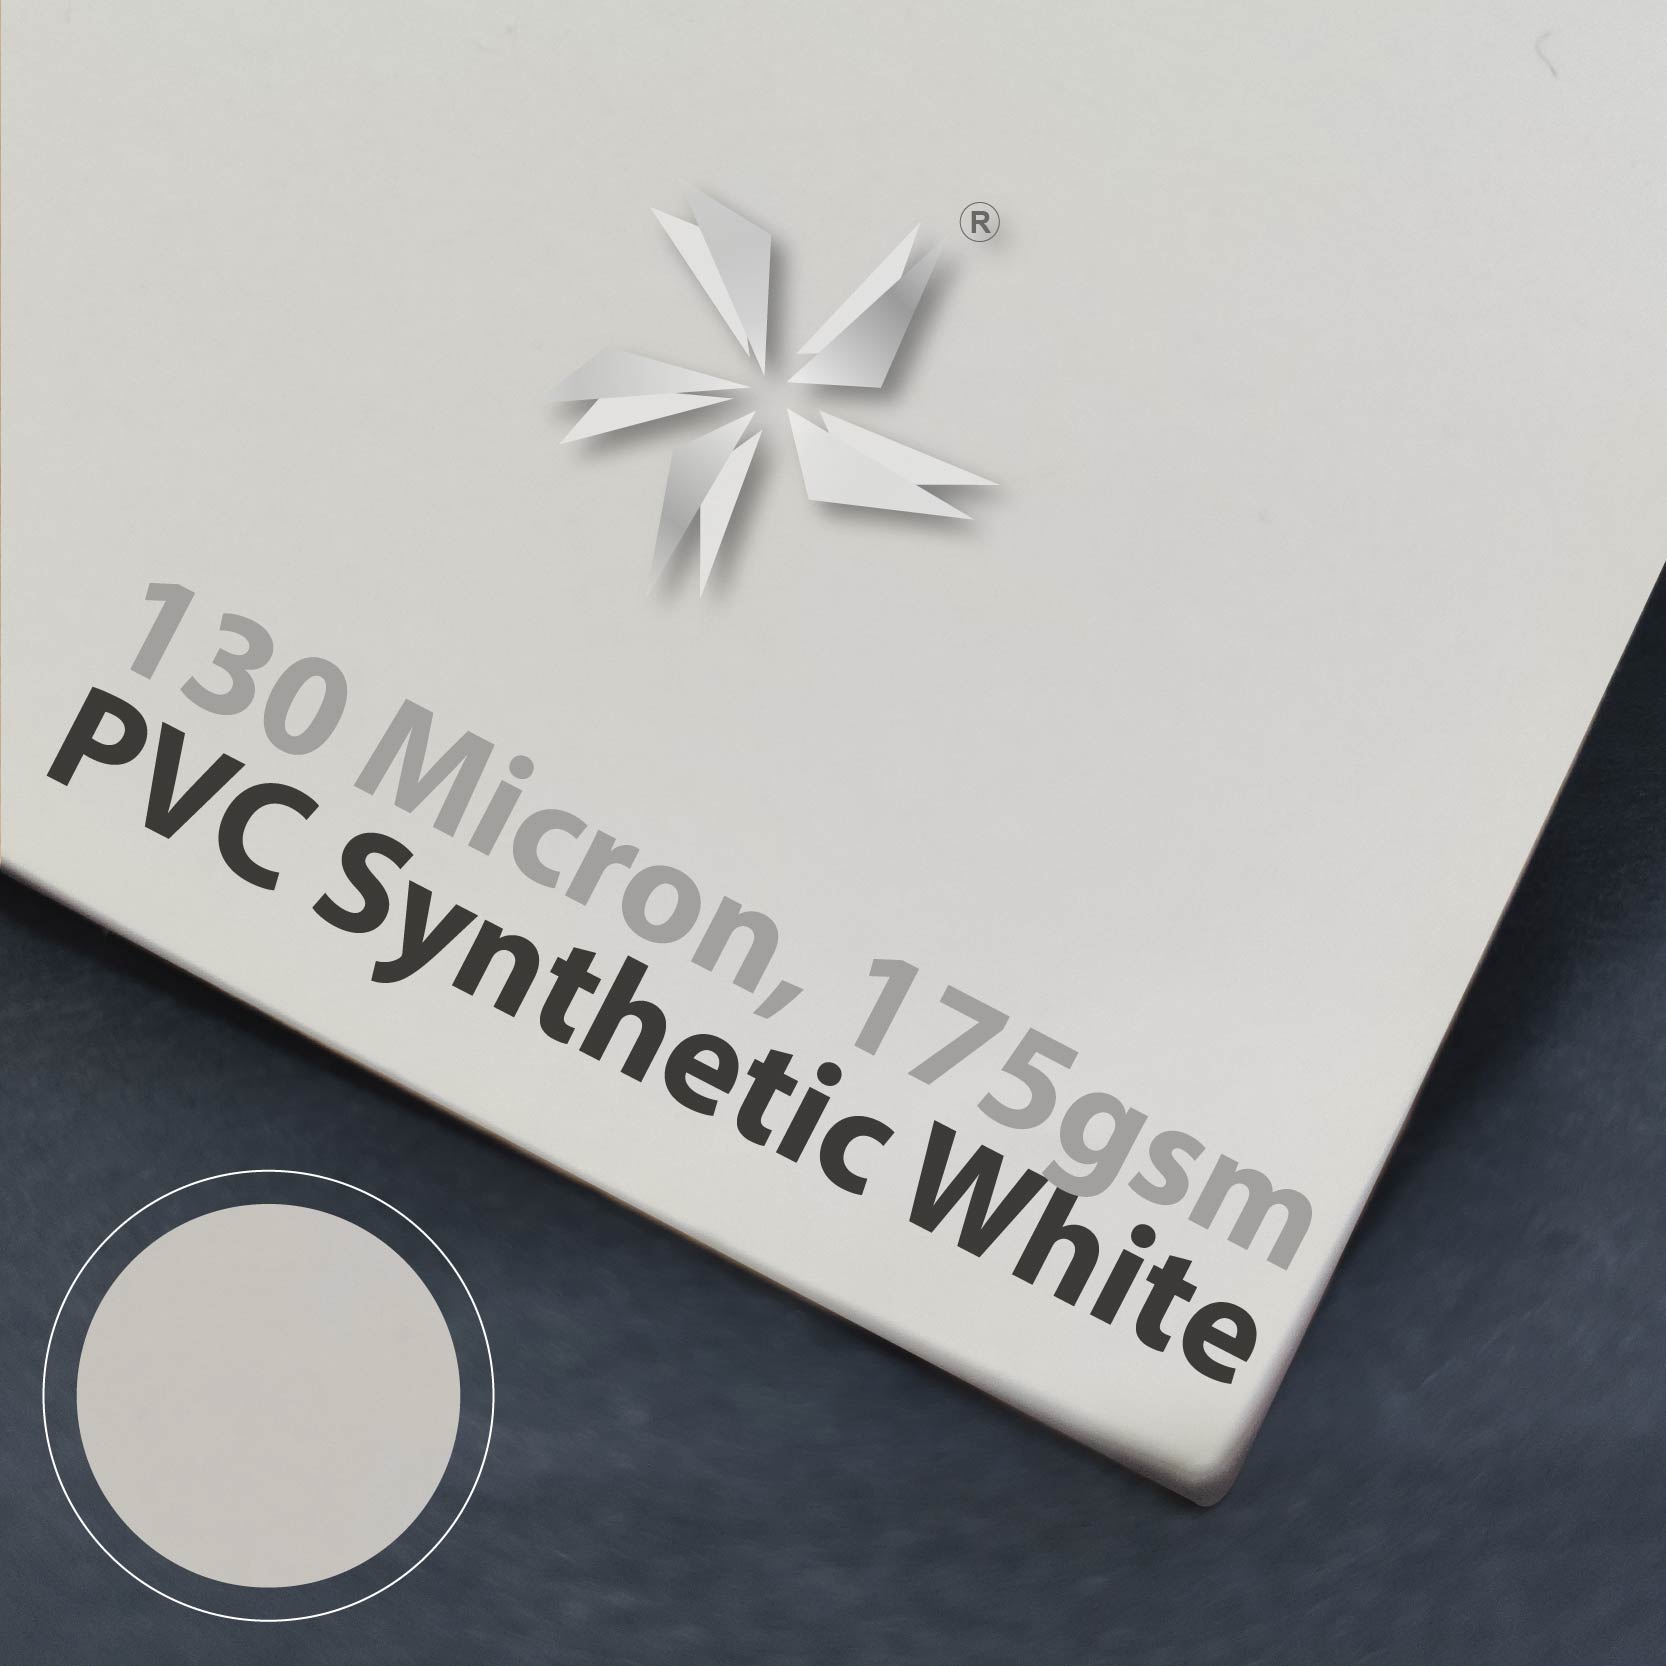 PVC Synthetic White 210Micron, 275gsm